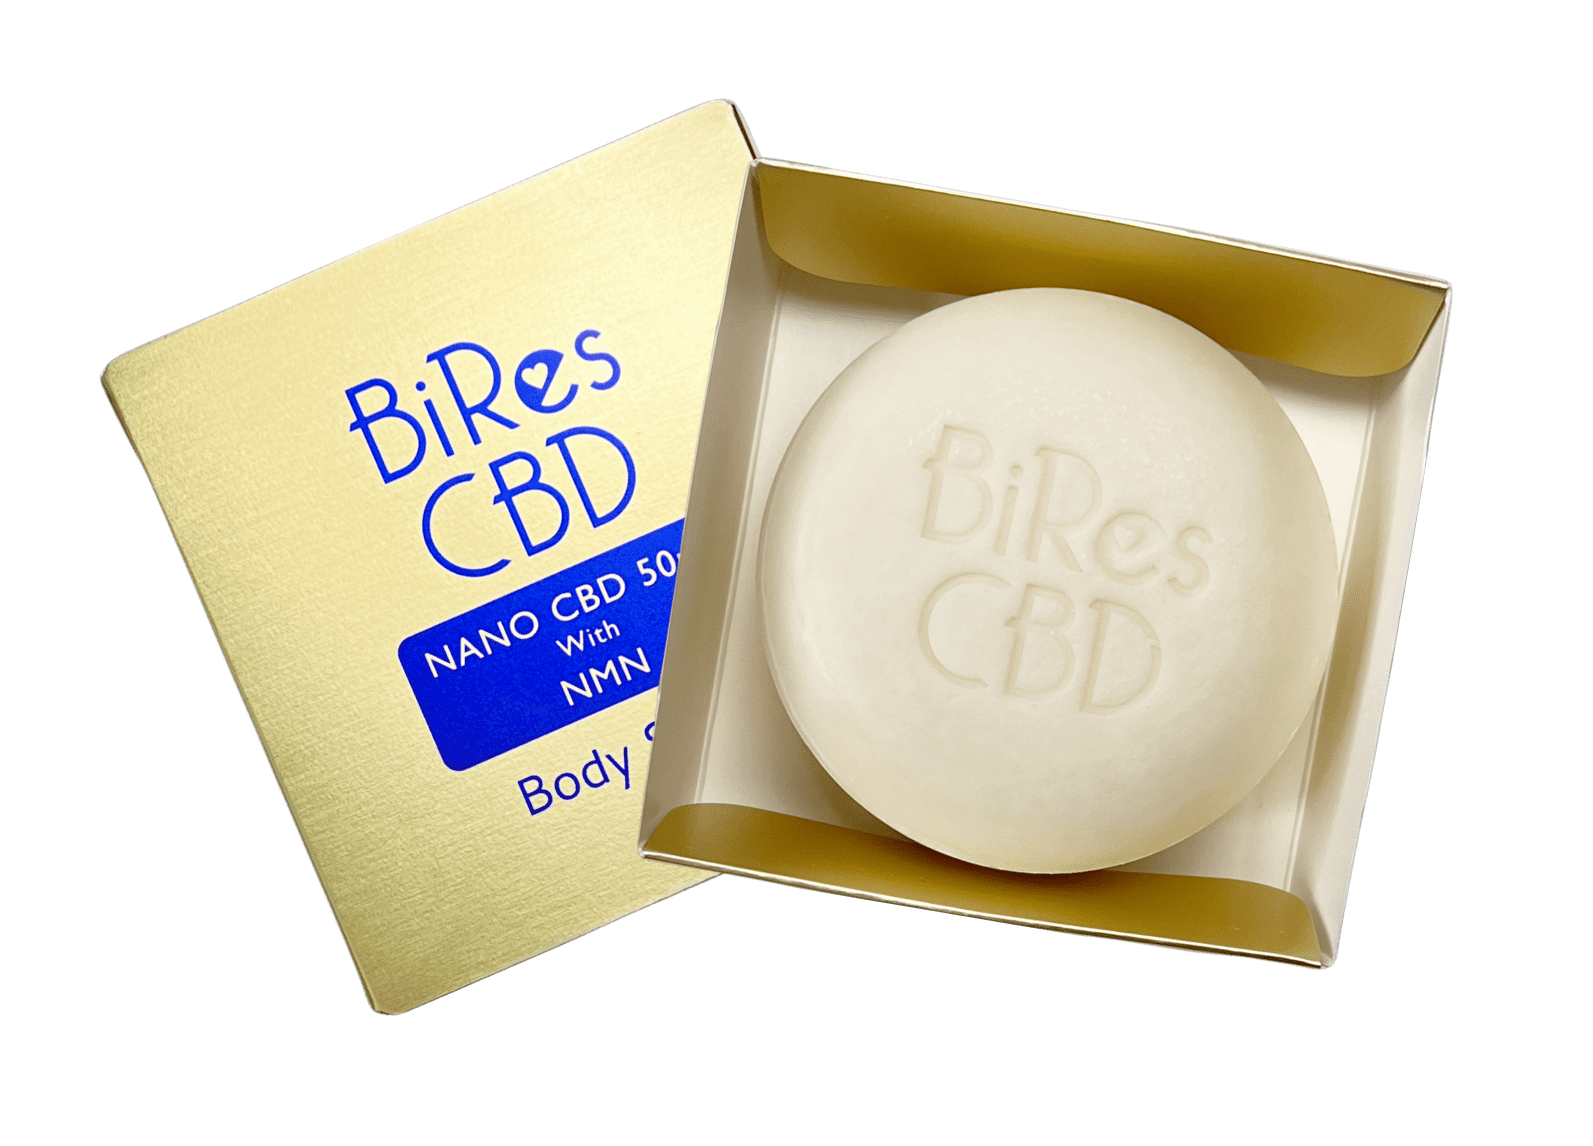 BiRes CBD NANO CBD with NMN Body Soap